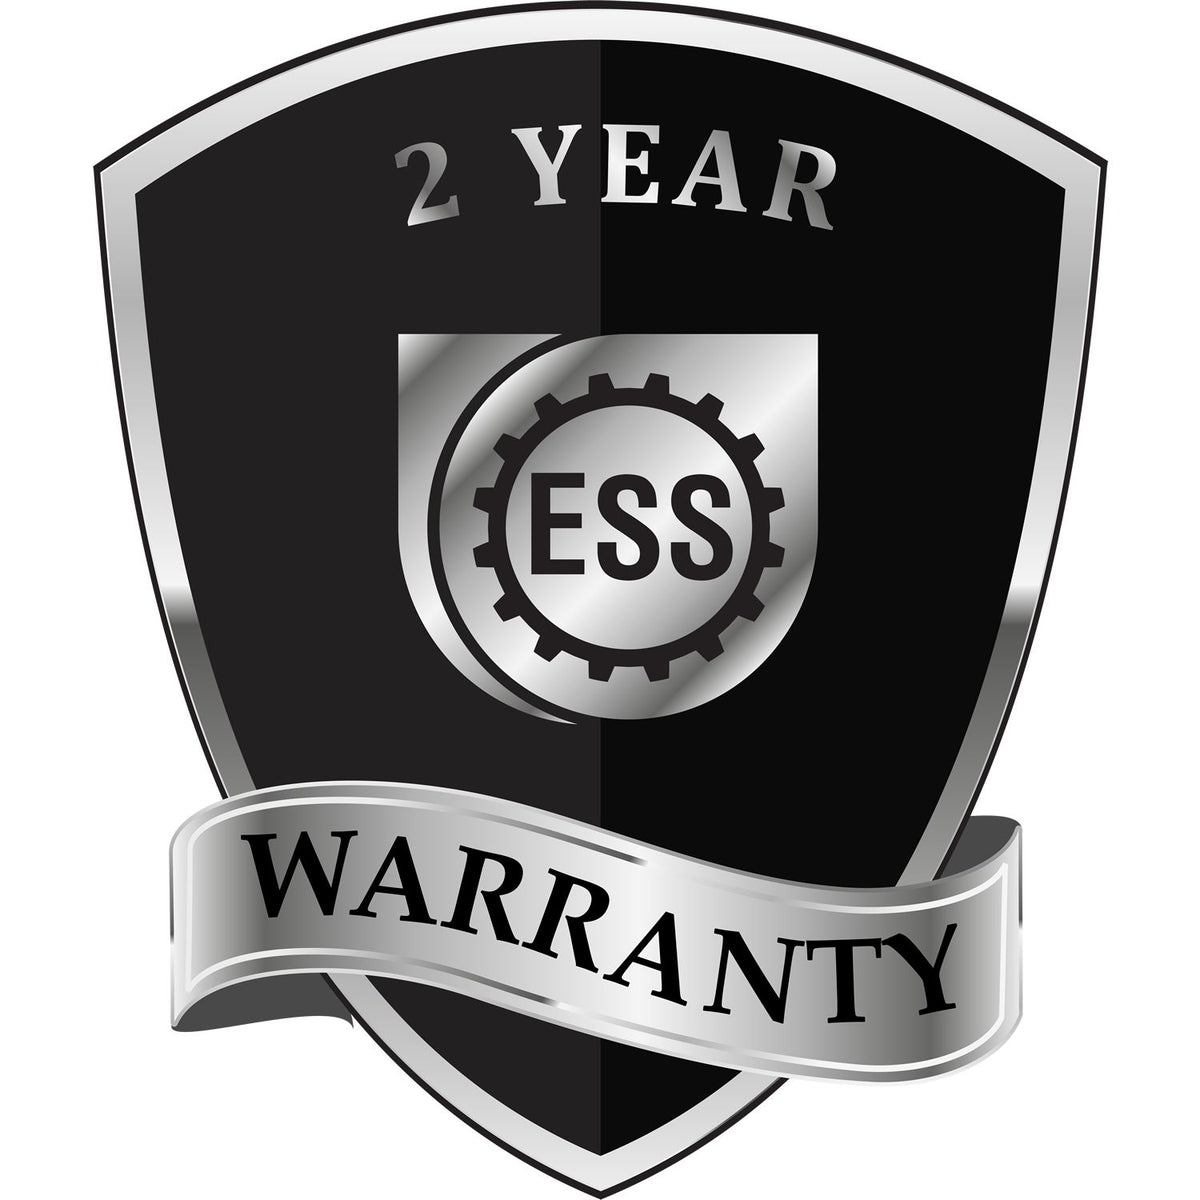 A black and silver badge or emblem showing warranty information for the Gift Alabama Land Surveyor Seal